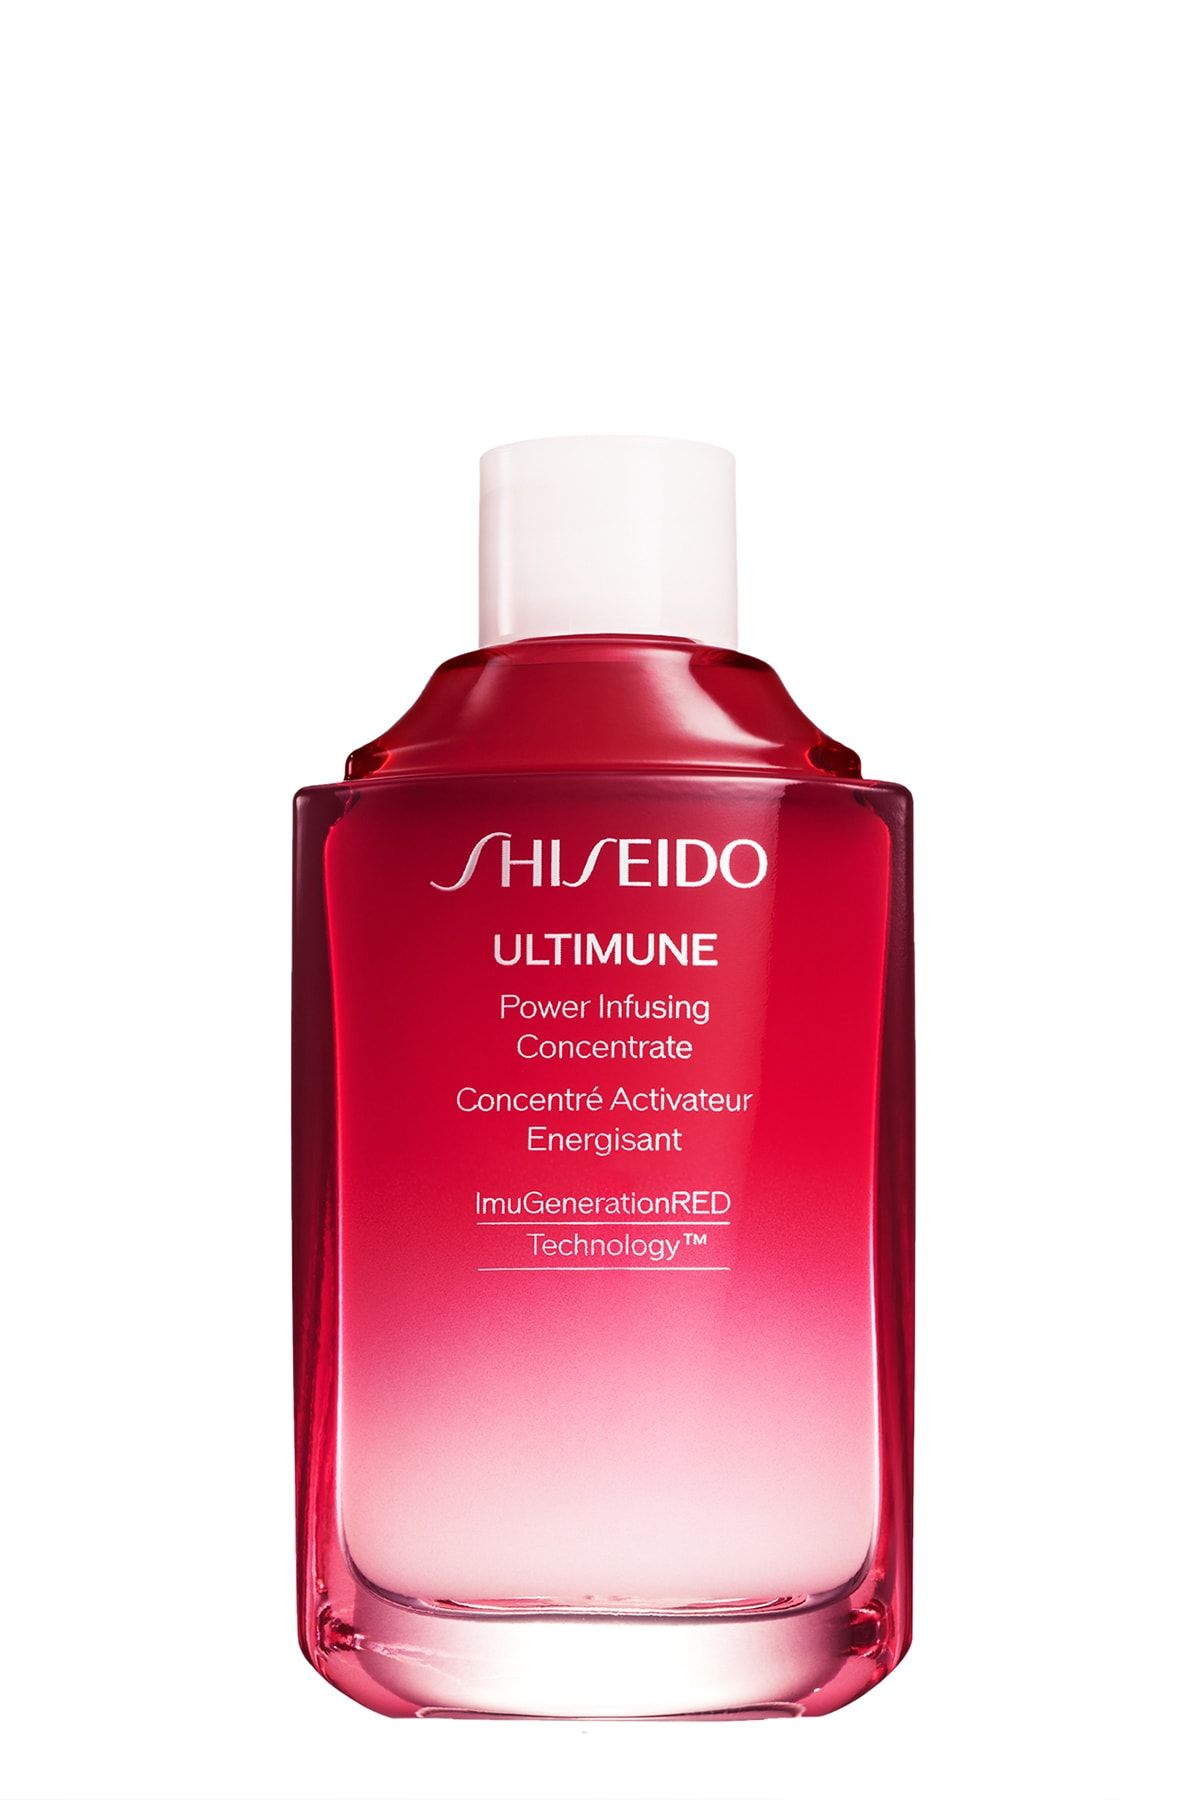 Shiseido power infusing concentrate. Shiseido Ultimune концентрат. Ultimune концентрат шисейдо Power infusing. Shiseido Ultimune Power infusing Concentrate 3.0 Refill. Shiseido Ultimune концентрат хранение.